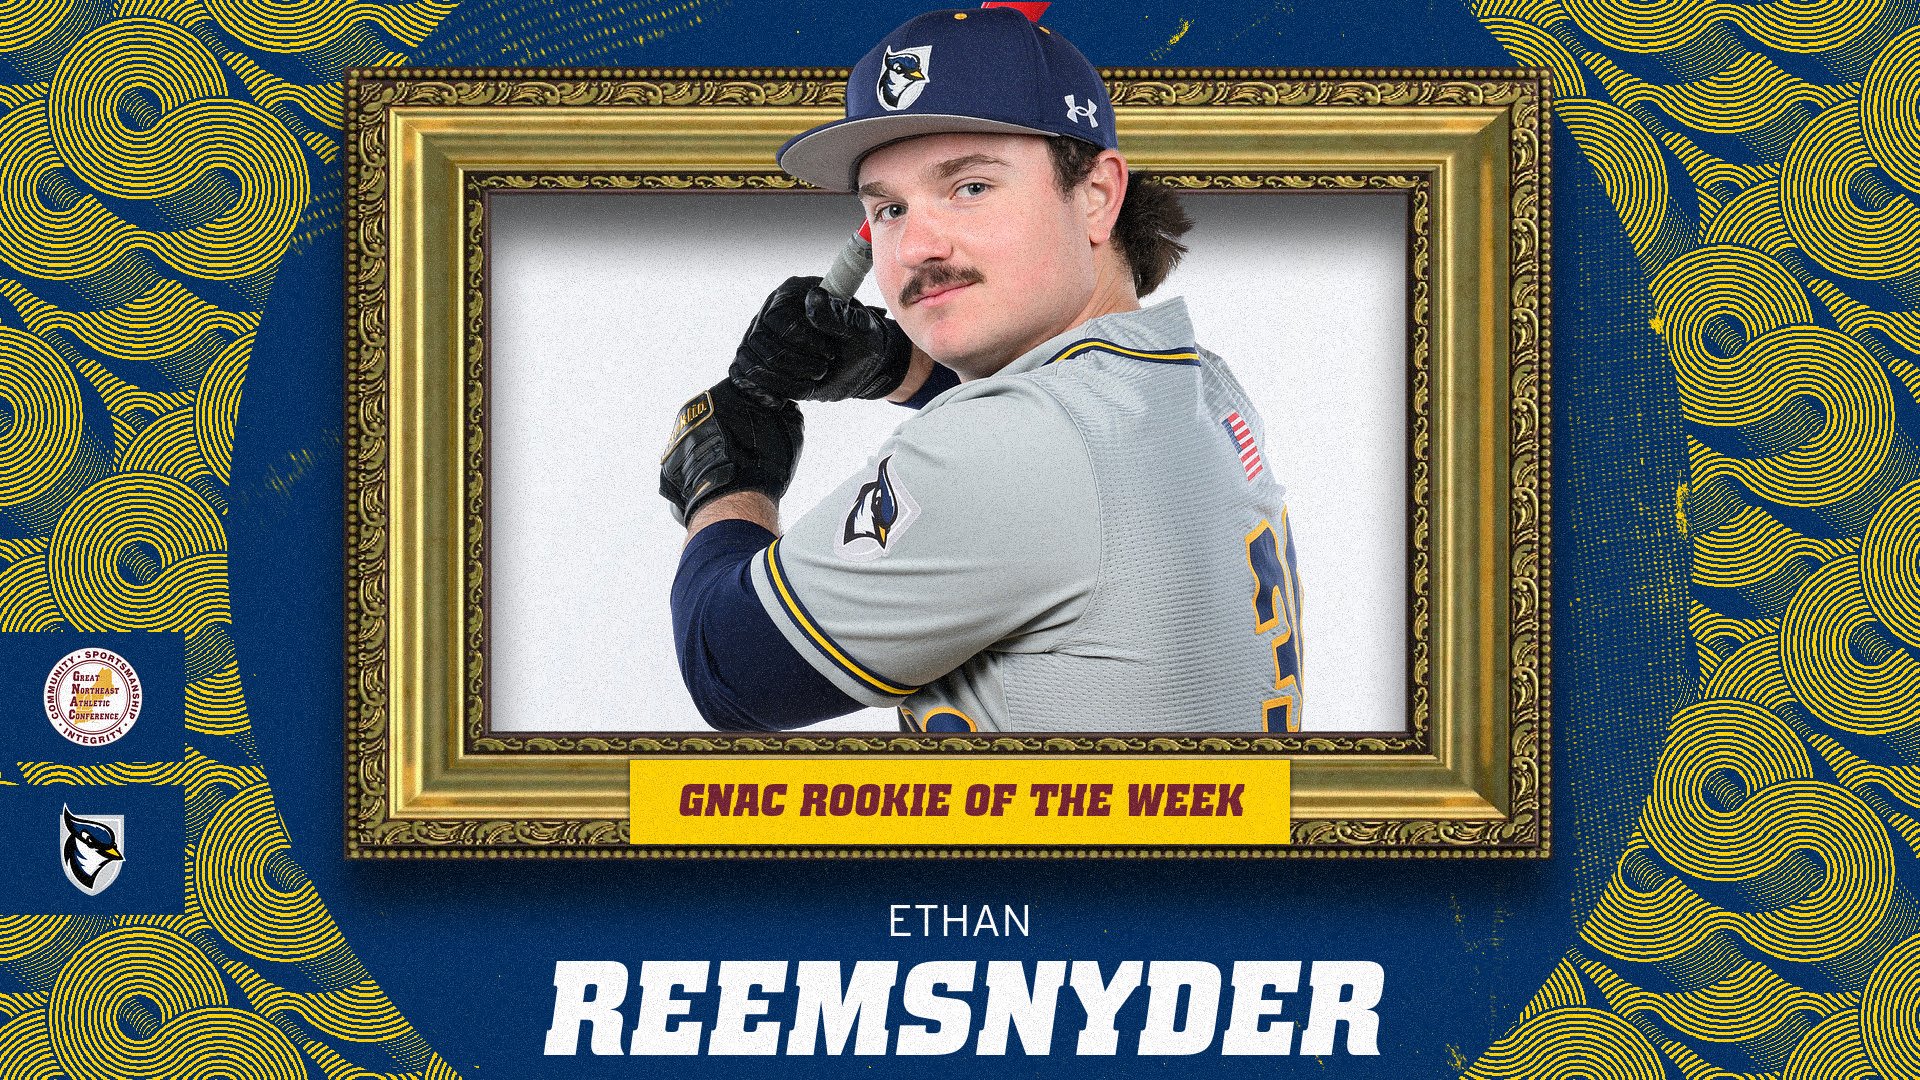 Reemsnyder Earns Baseball's First-Ever GNAC Weekly Honor, Named Rookie of the Week